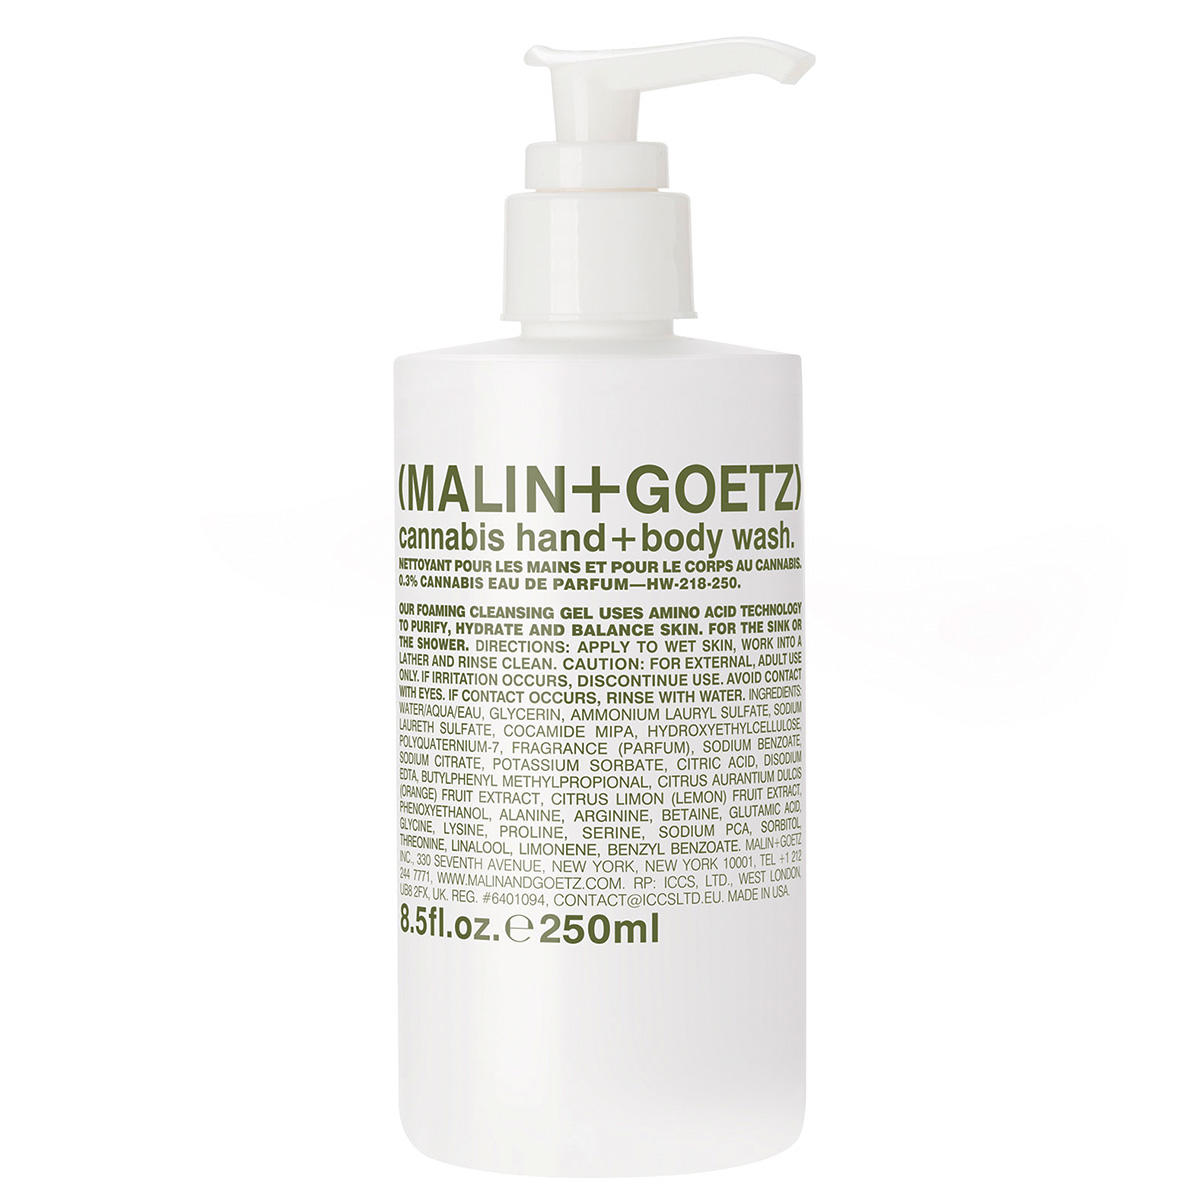 (MALIN+GOETZ) Cannabis Hand + Body Wash 250 ml - 1